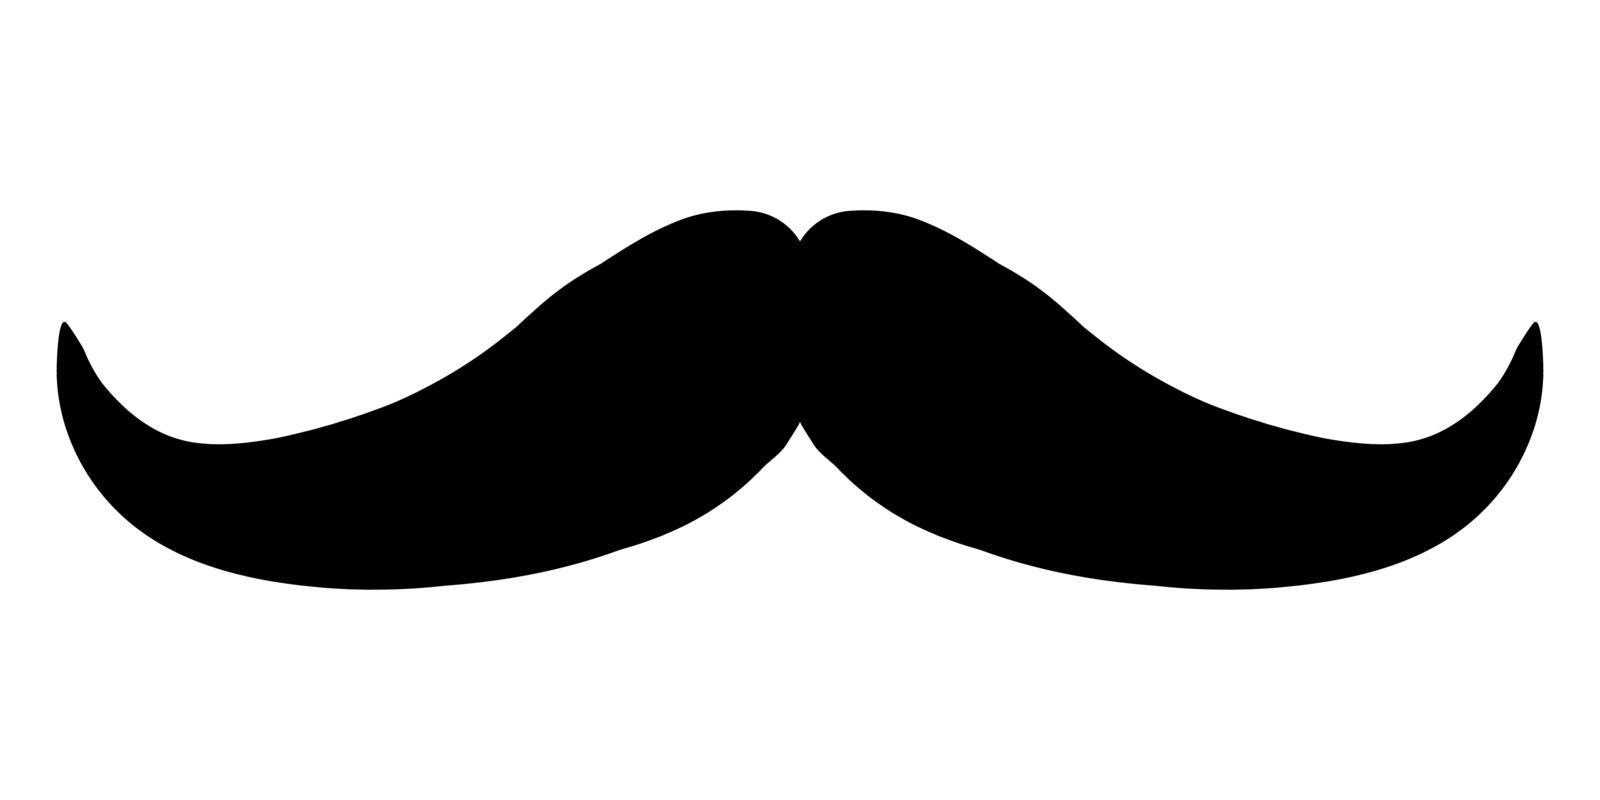 Black mustache swirls icon. Curly fashionable male mustache by koksikoks